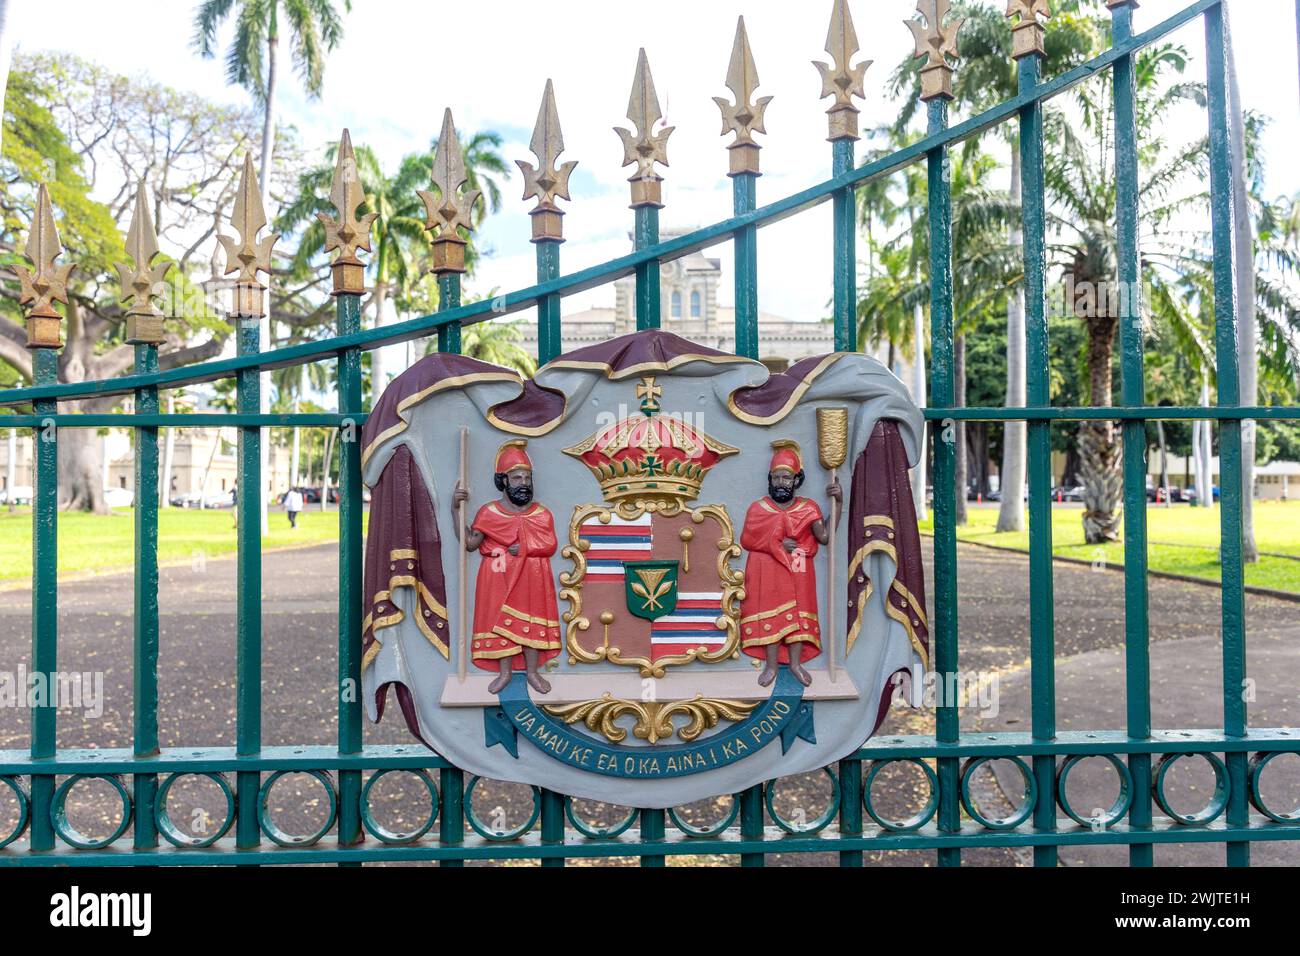 Royal Coat of Arms on gate of Iolani Palace, King Street, Honolulu, Oahu, Hawaii, United States of America Stock Photo